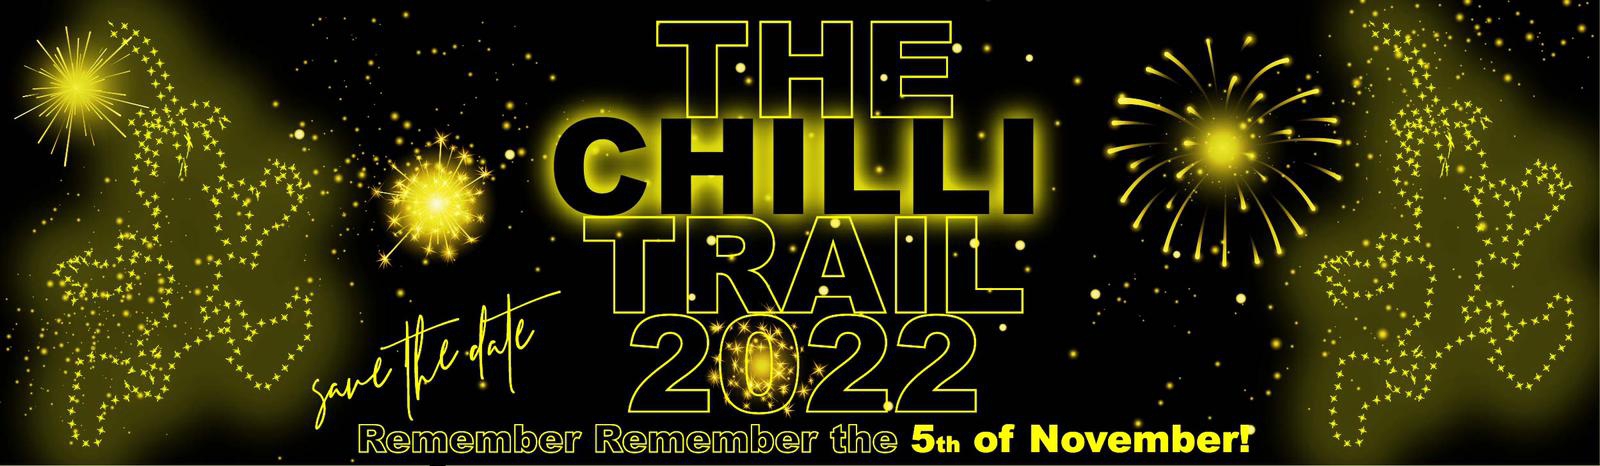 Auchterarder 10K Chilli Trail Race 2022 carousel image 1